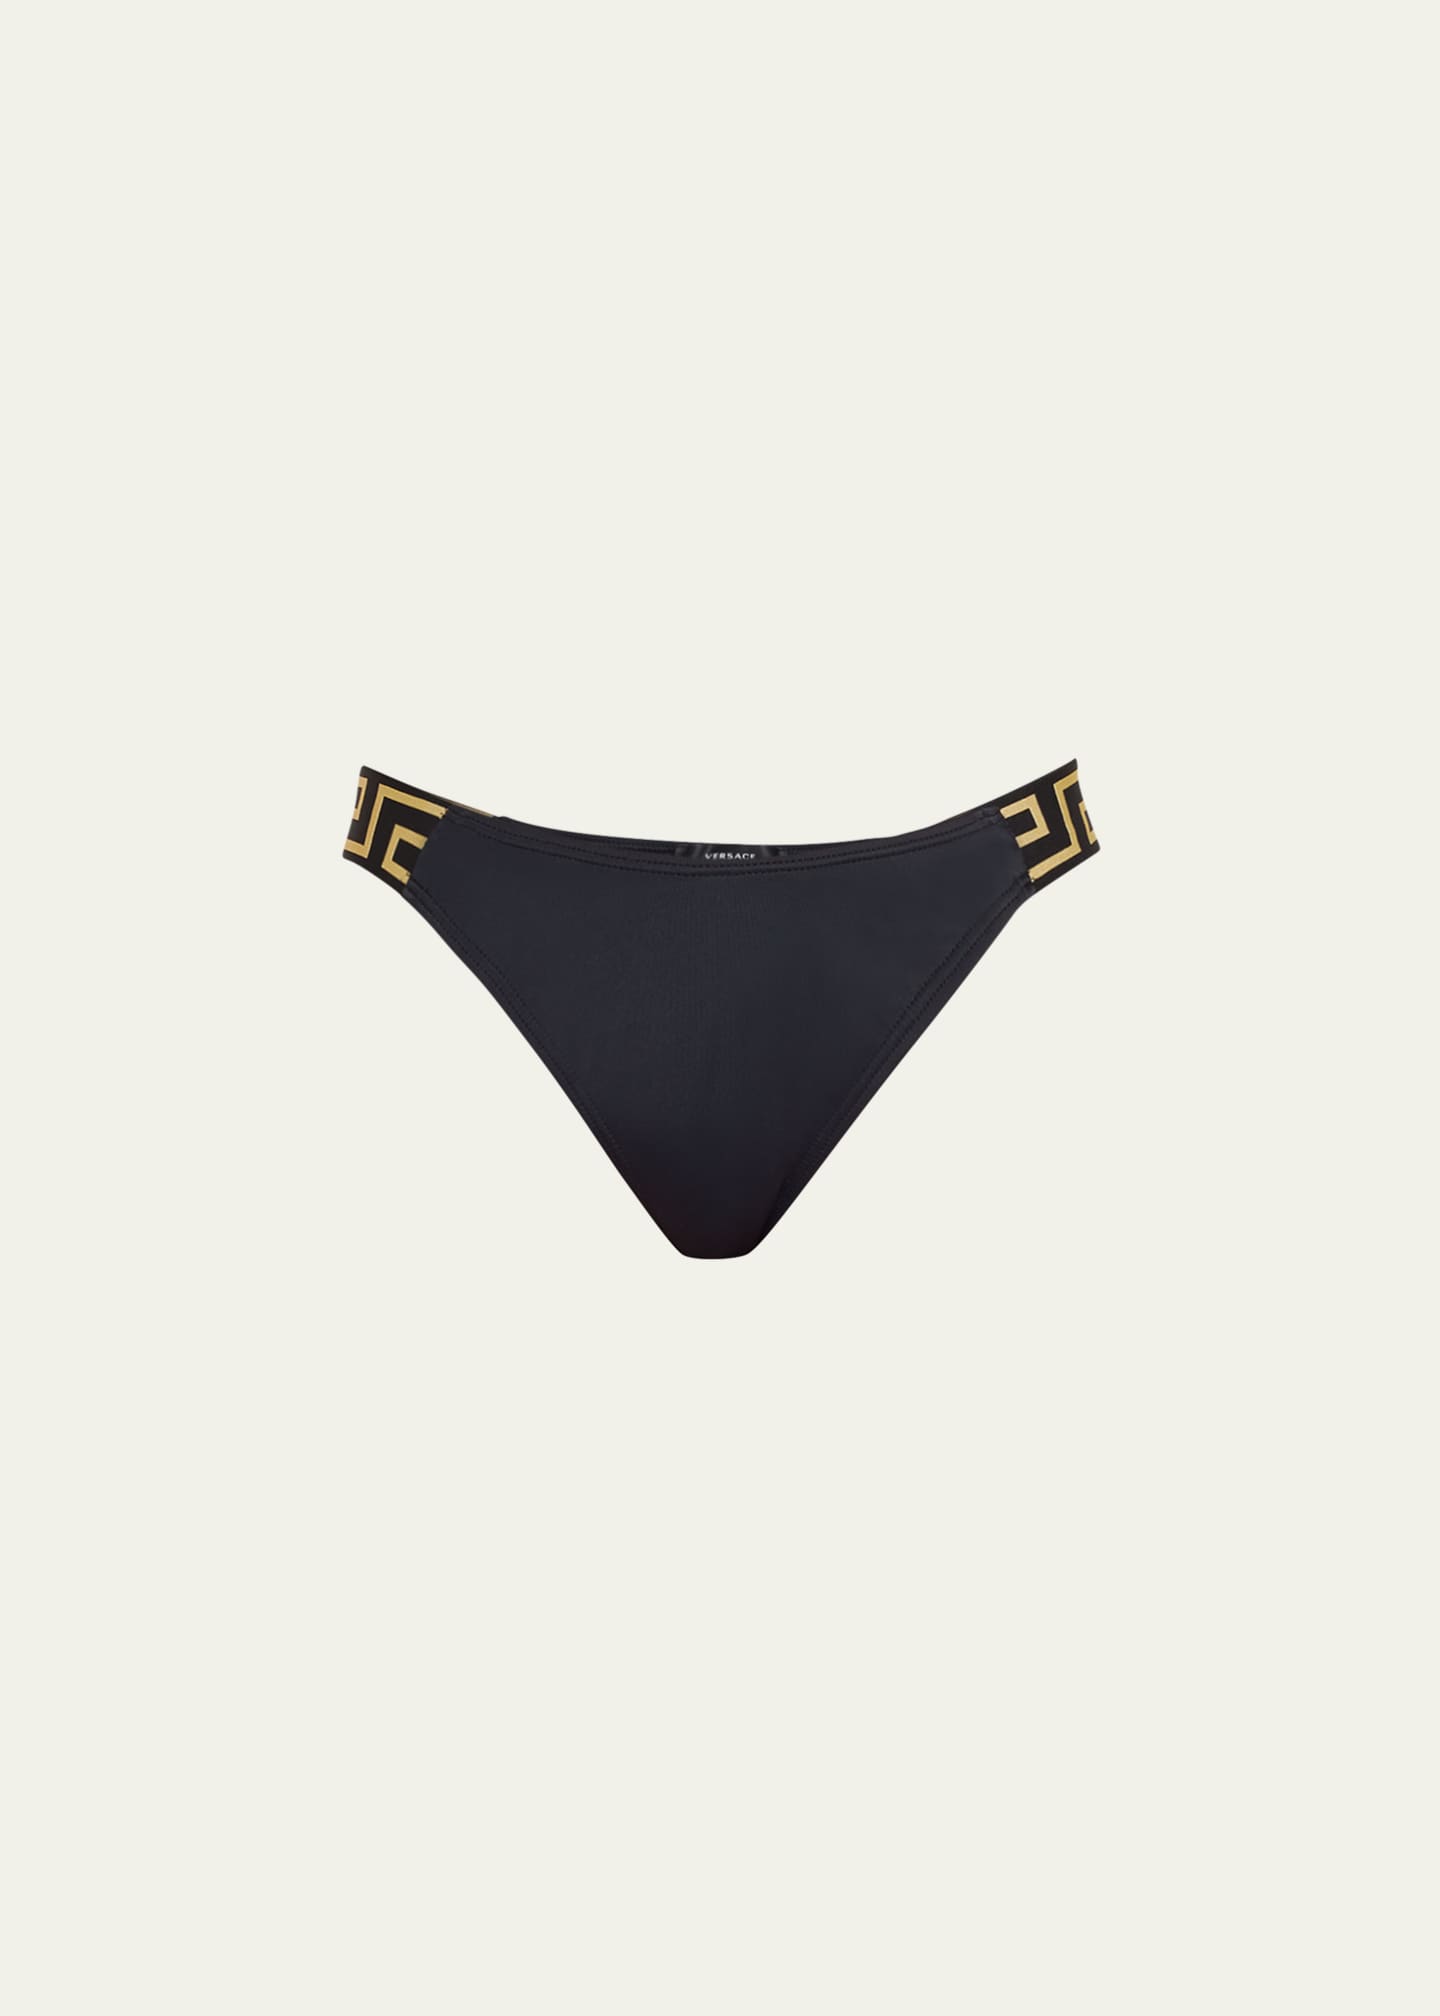 Black La Greca Thong by Versace Underwear on Sale